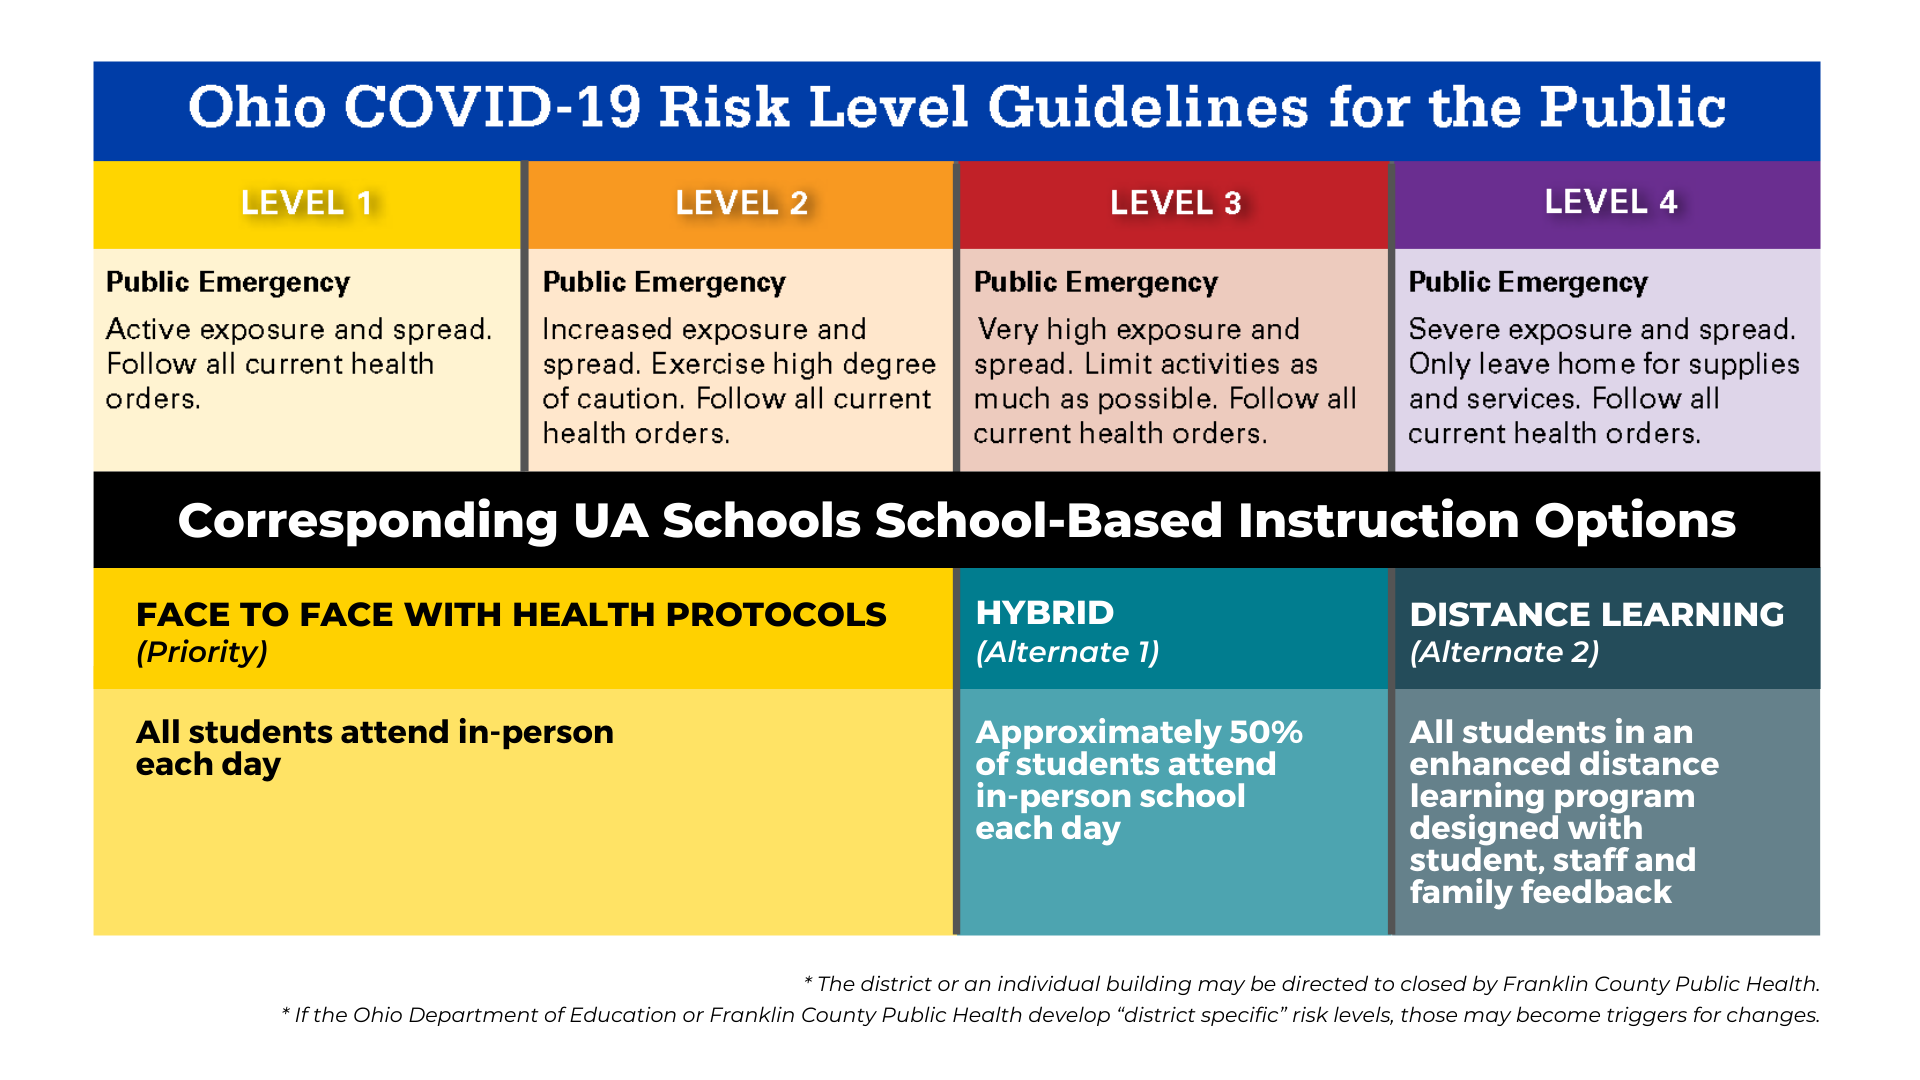 Ohio Risk Level Guidelines and corresponding school-based instruction options